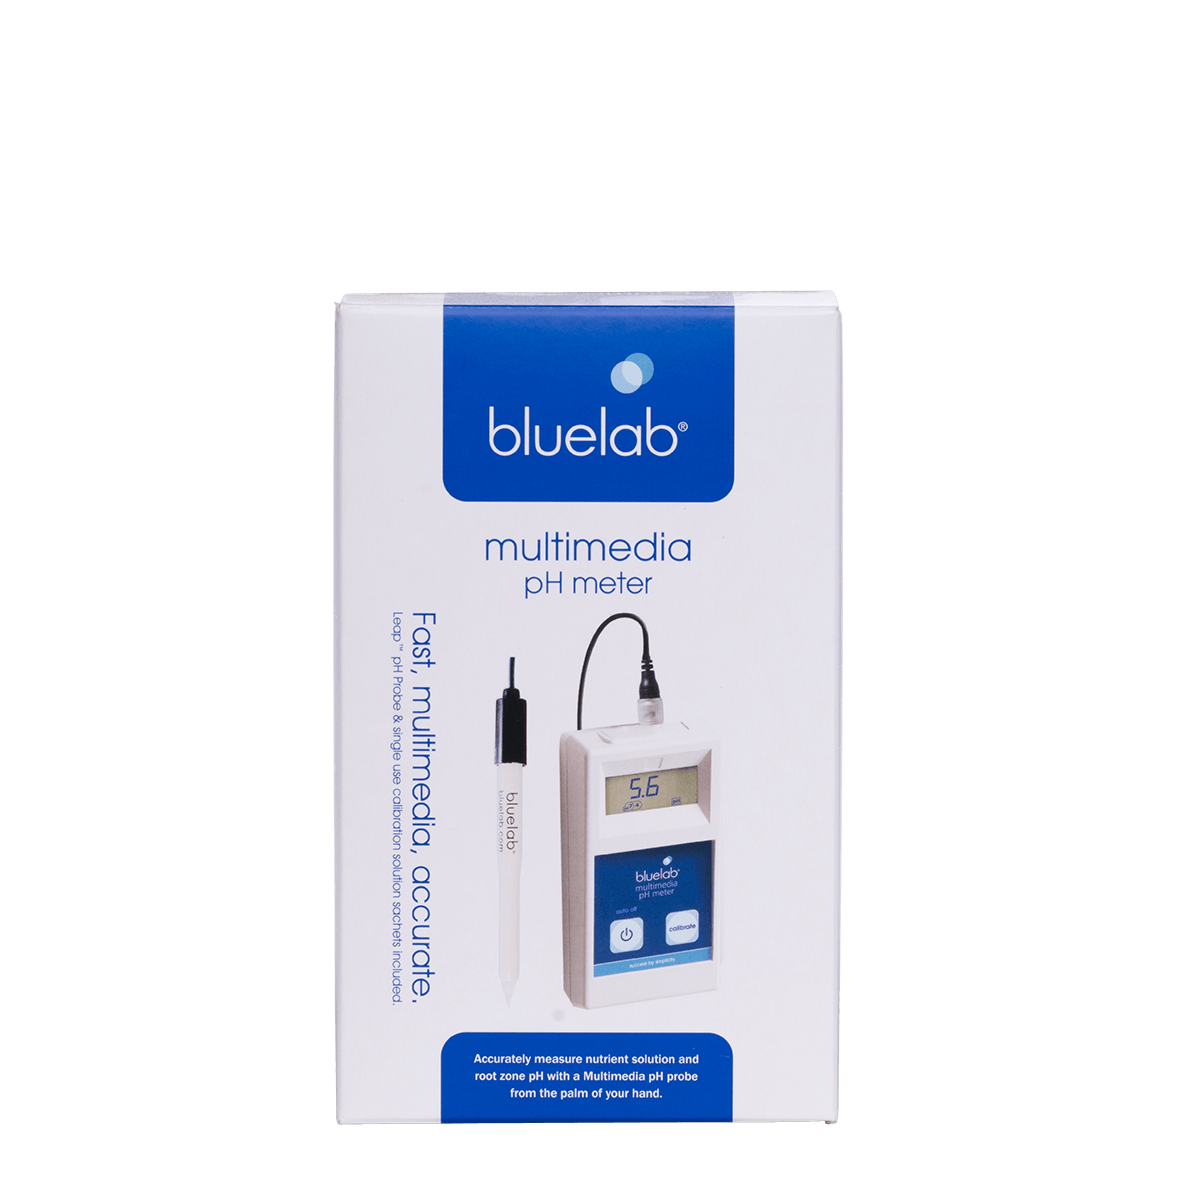 Bluelab Multimedia, pH Meter